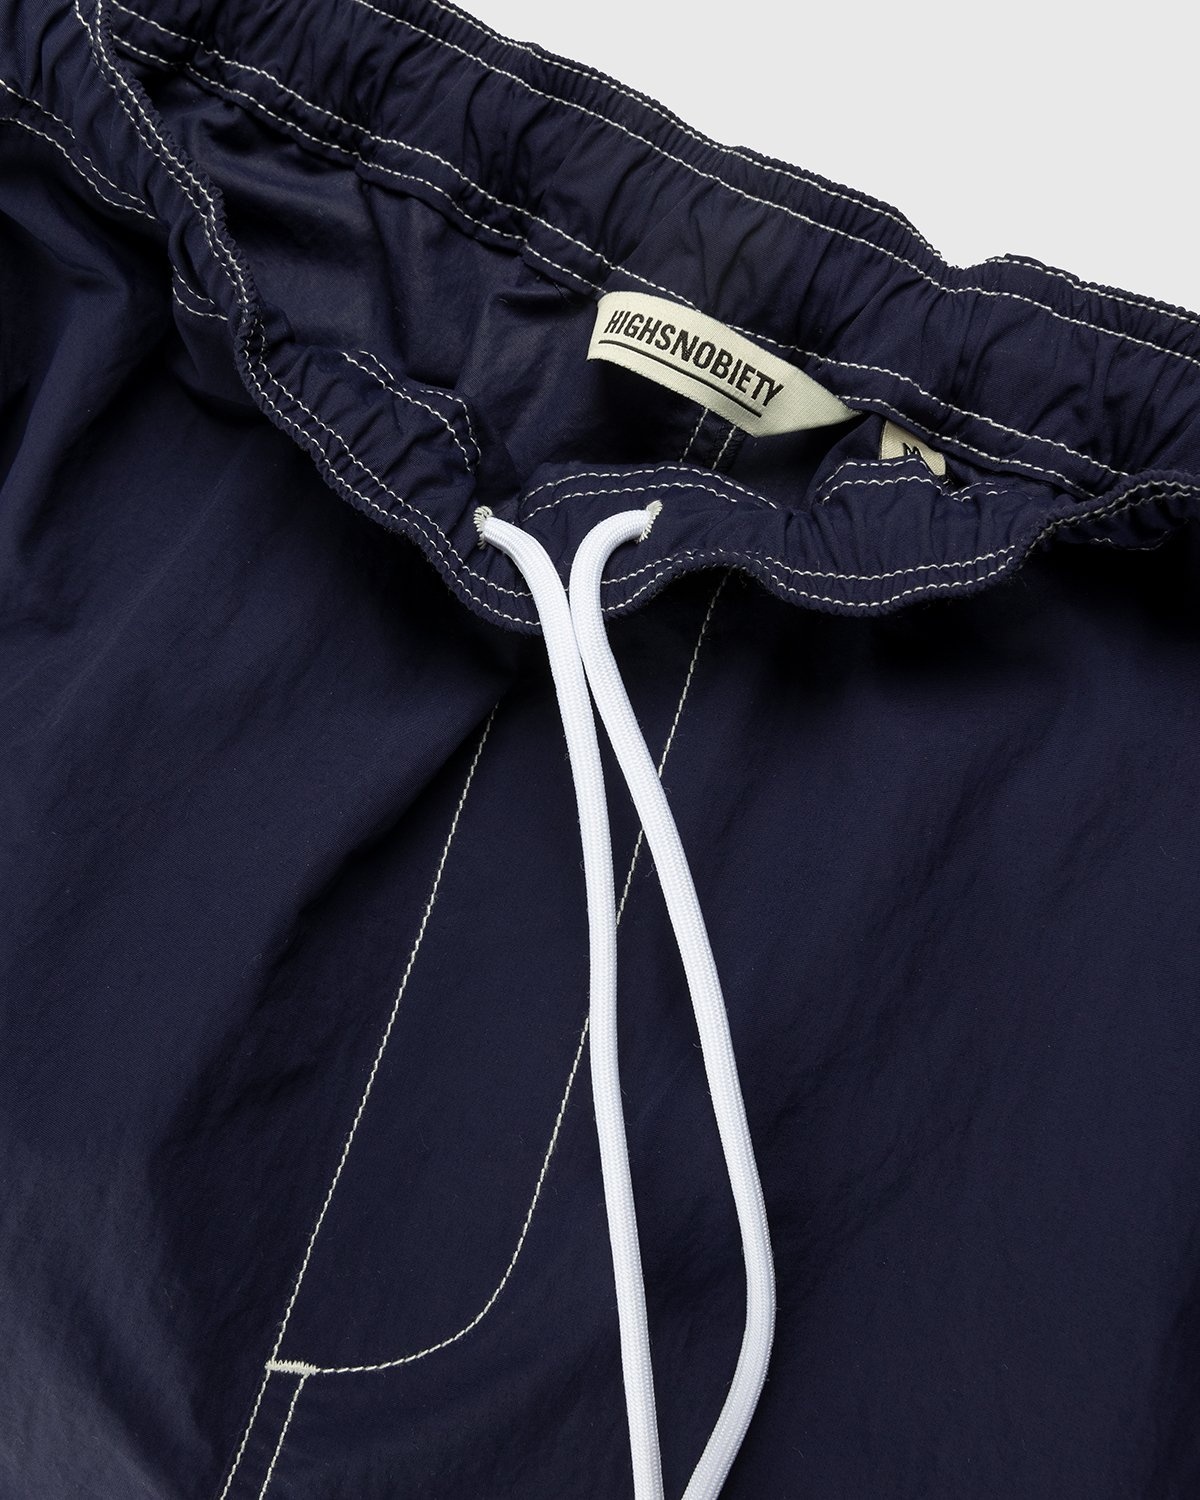 Highsnobiety – Contrast Brushed Nylon Elastic Pants Navy - Active Pants - Blue - Image 5